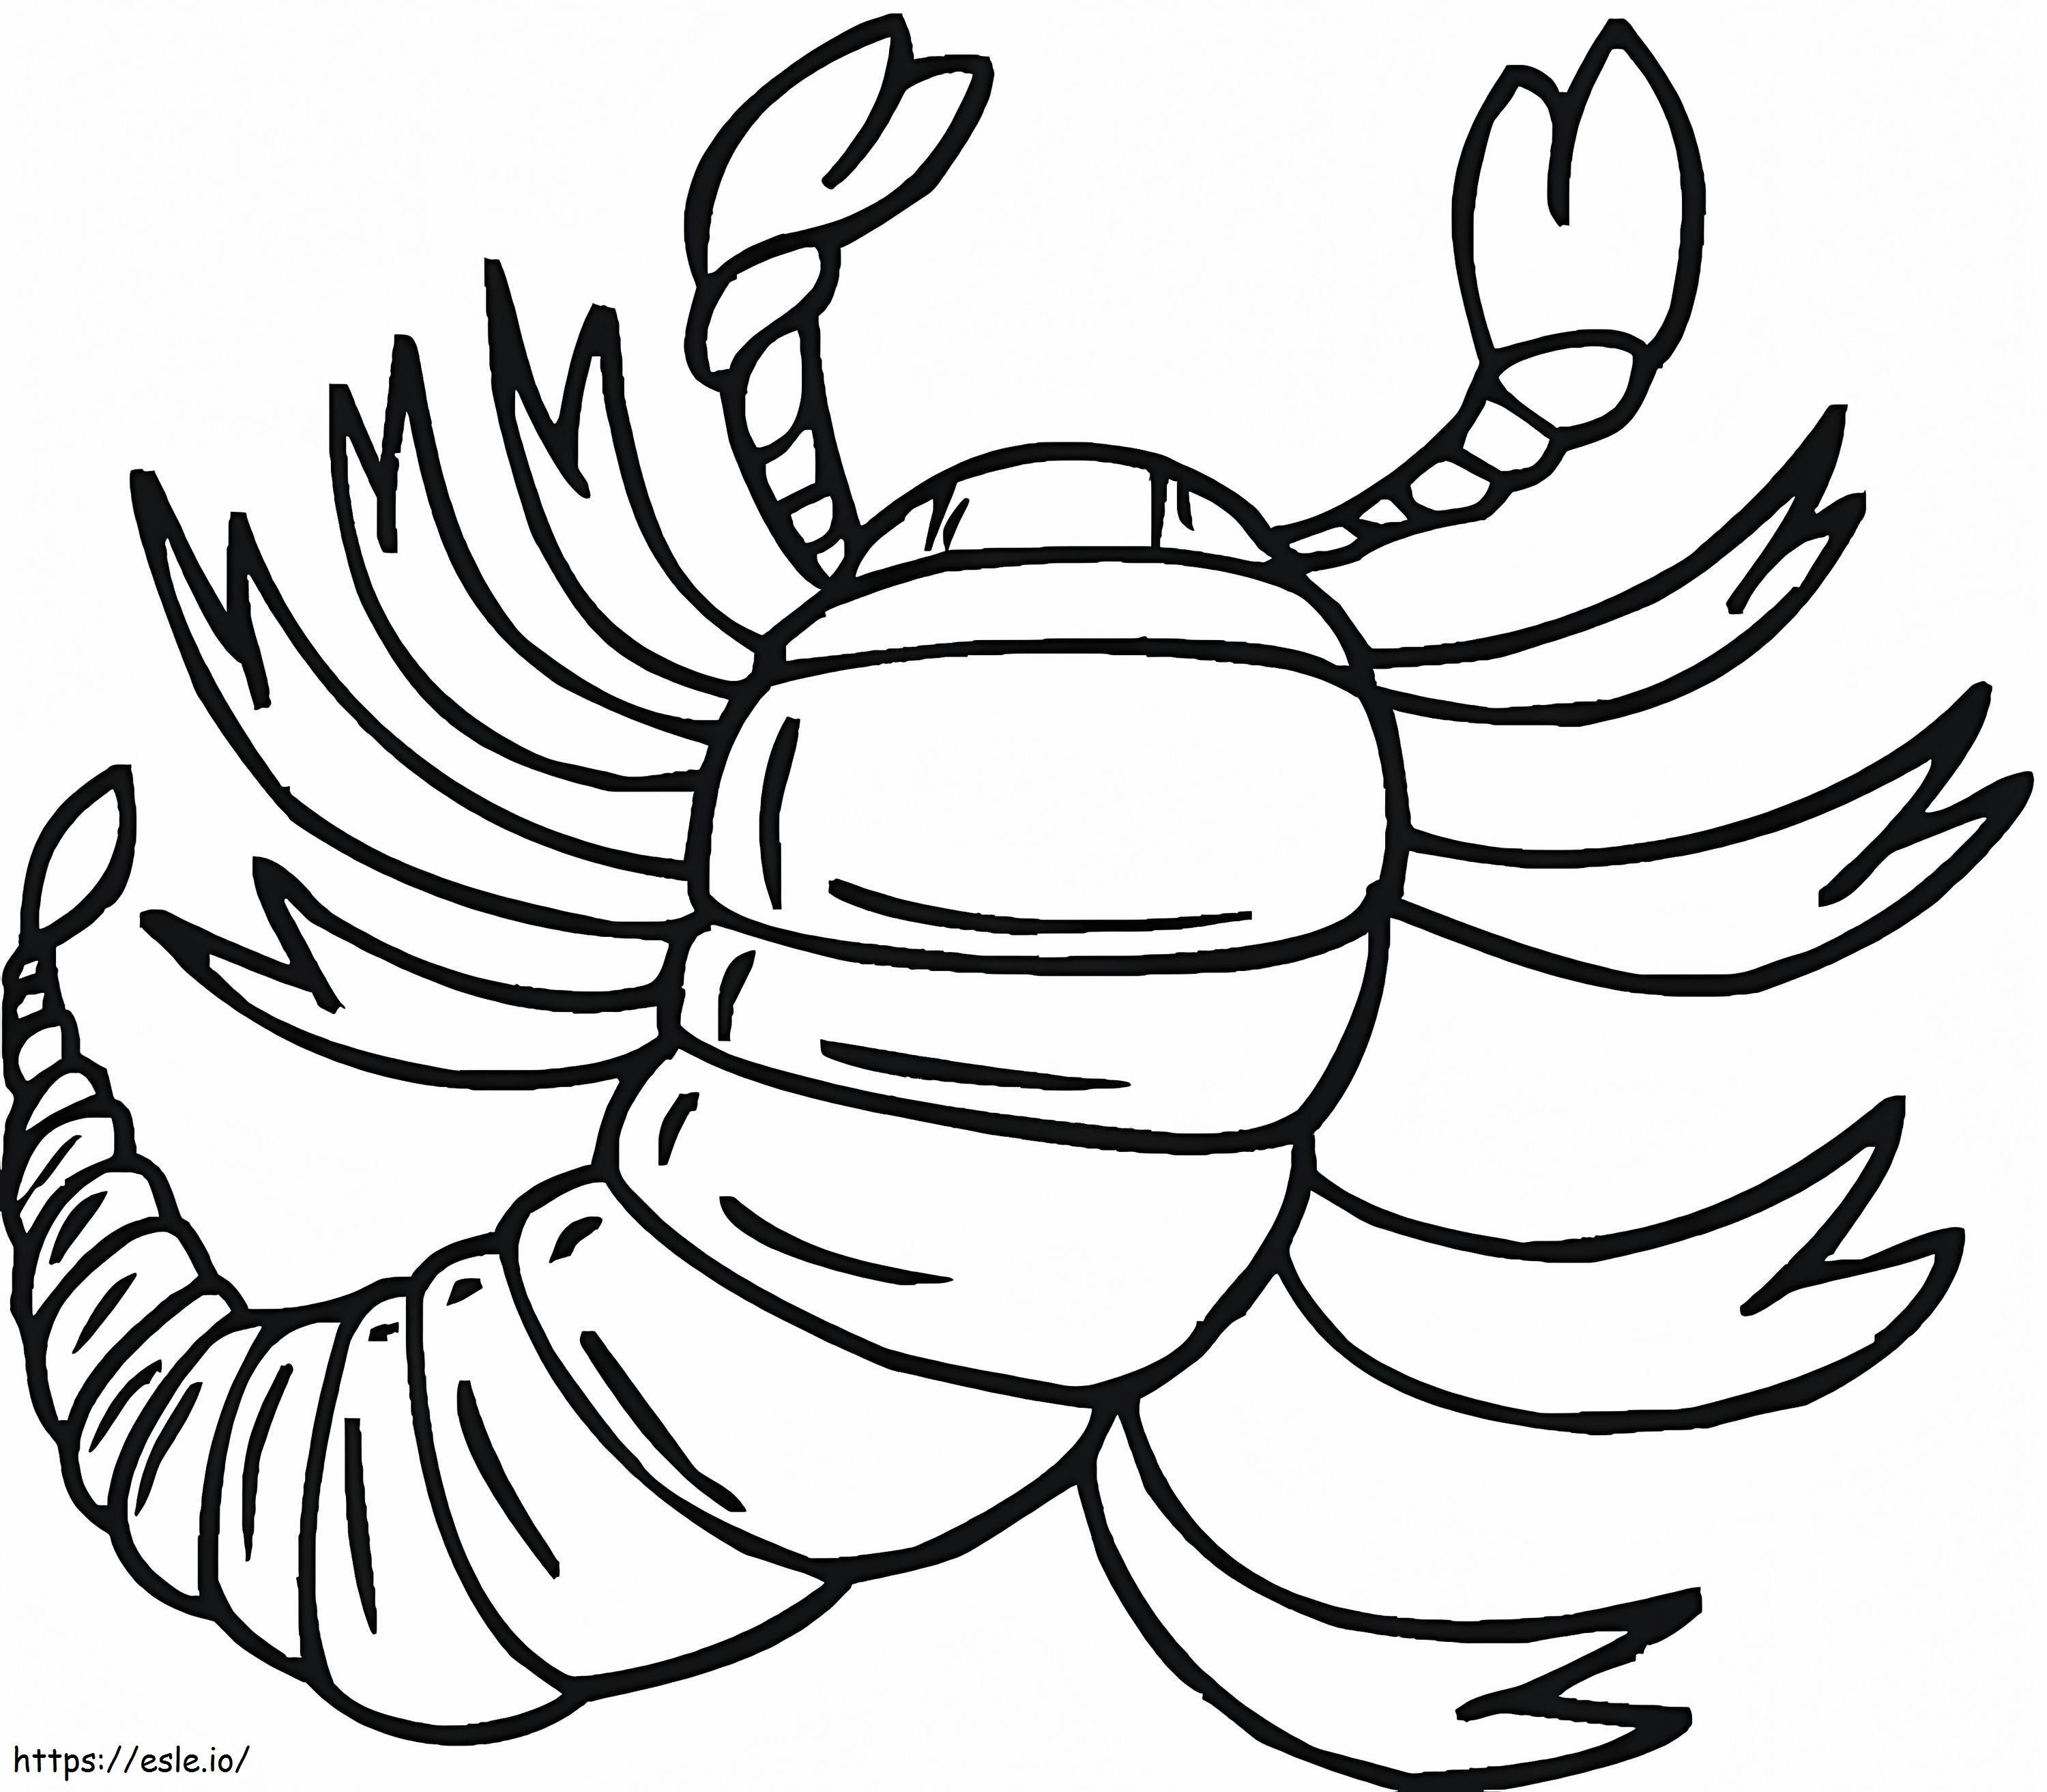 Skorpion 9 ausmalbilder